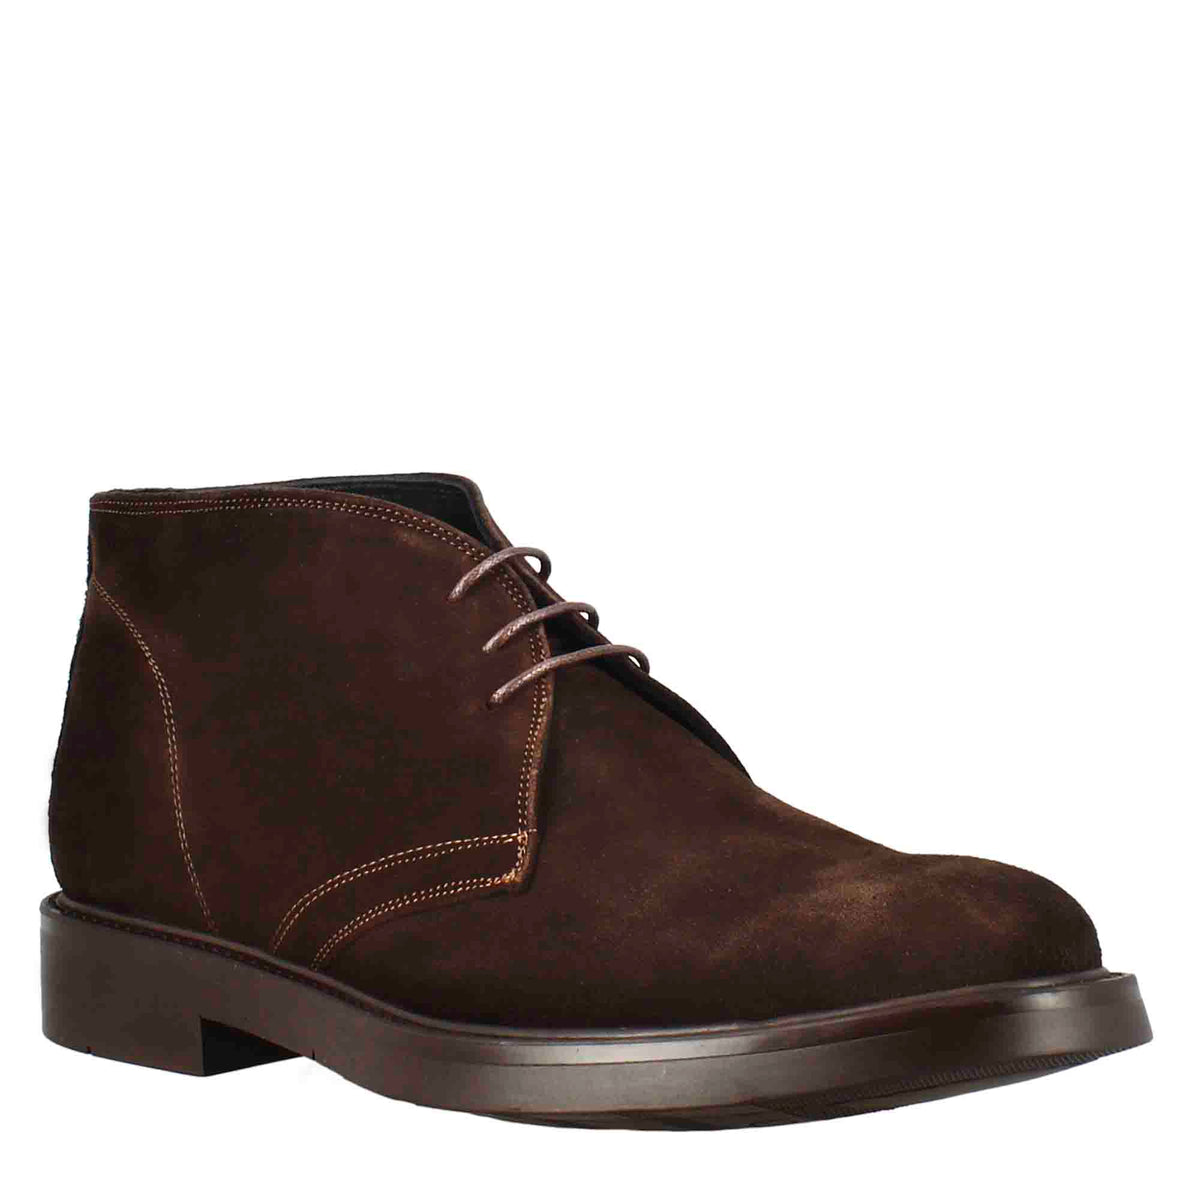 Men's ankle boot in dark brown suede